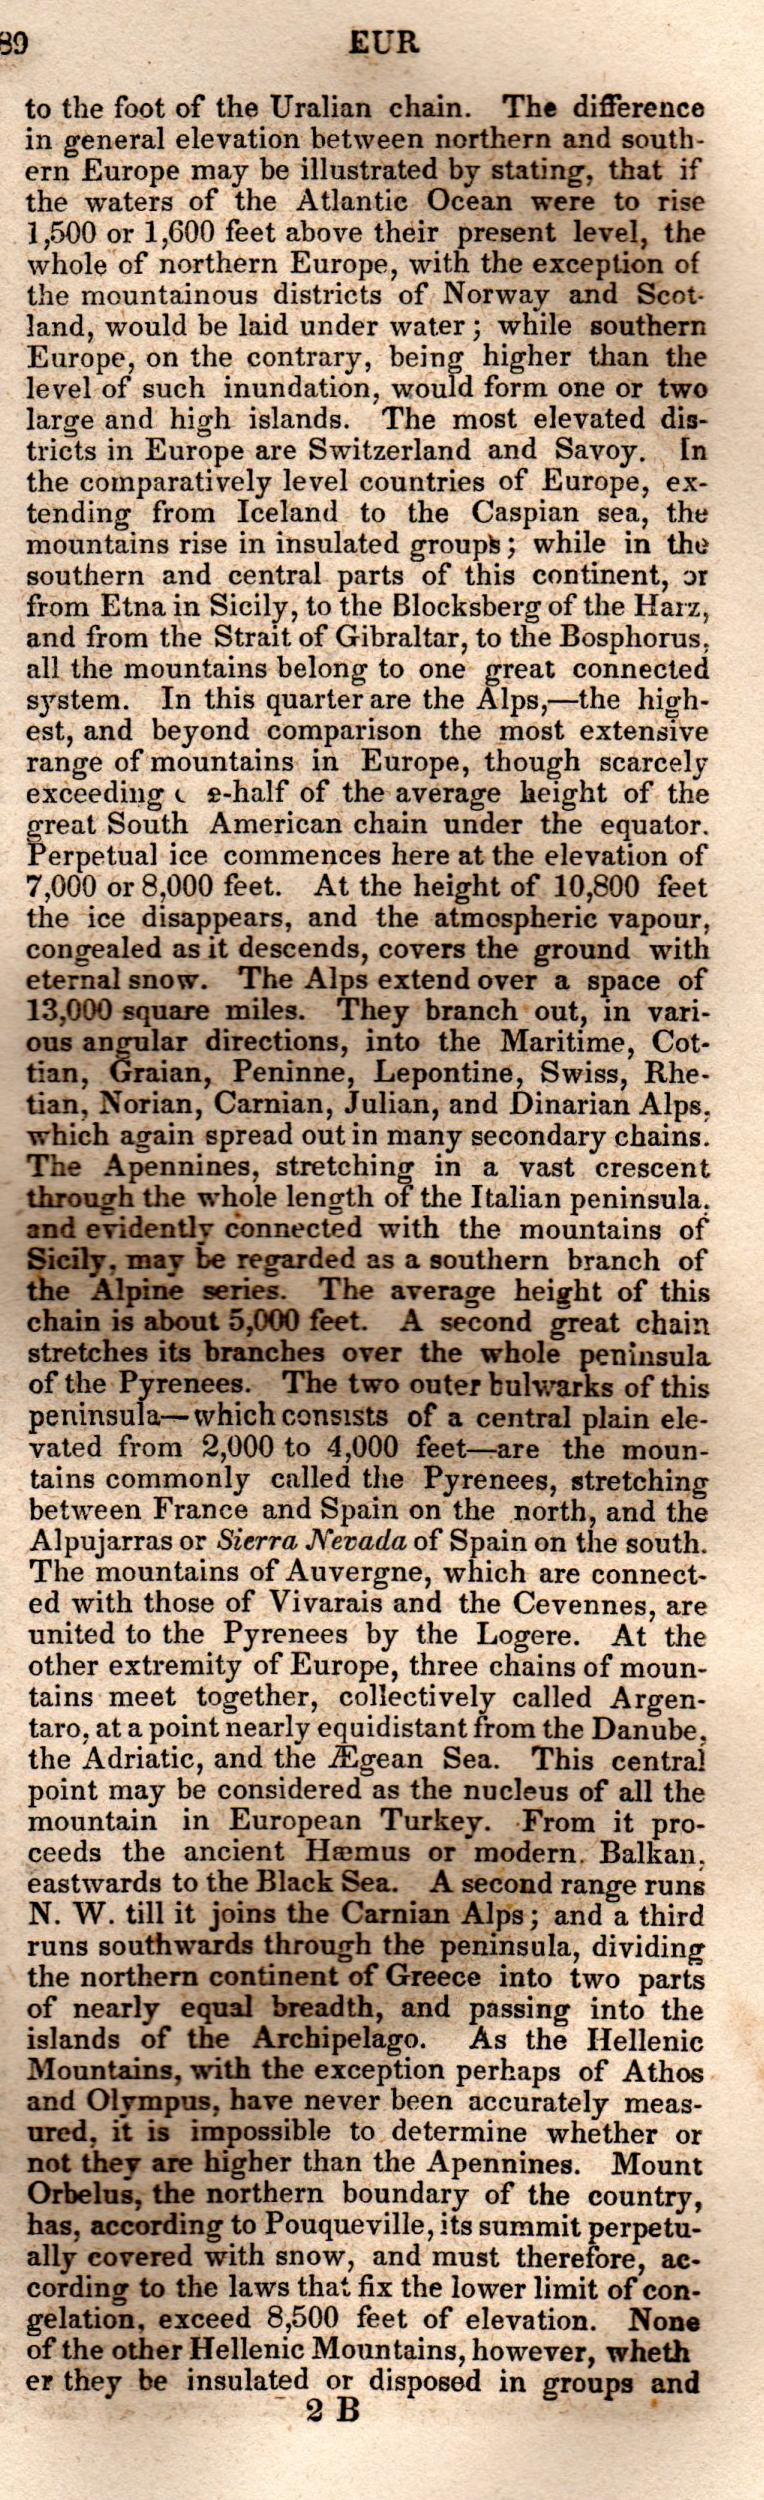 Brookes’ Universal Gazetteer (1850), Page 289 Right Column